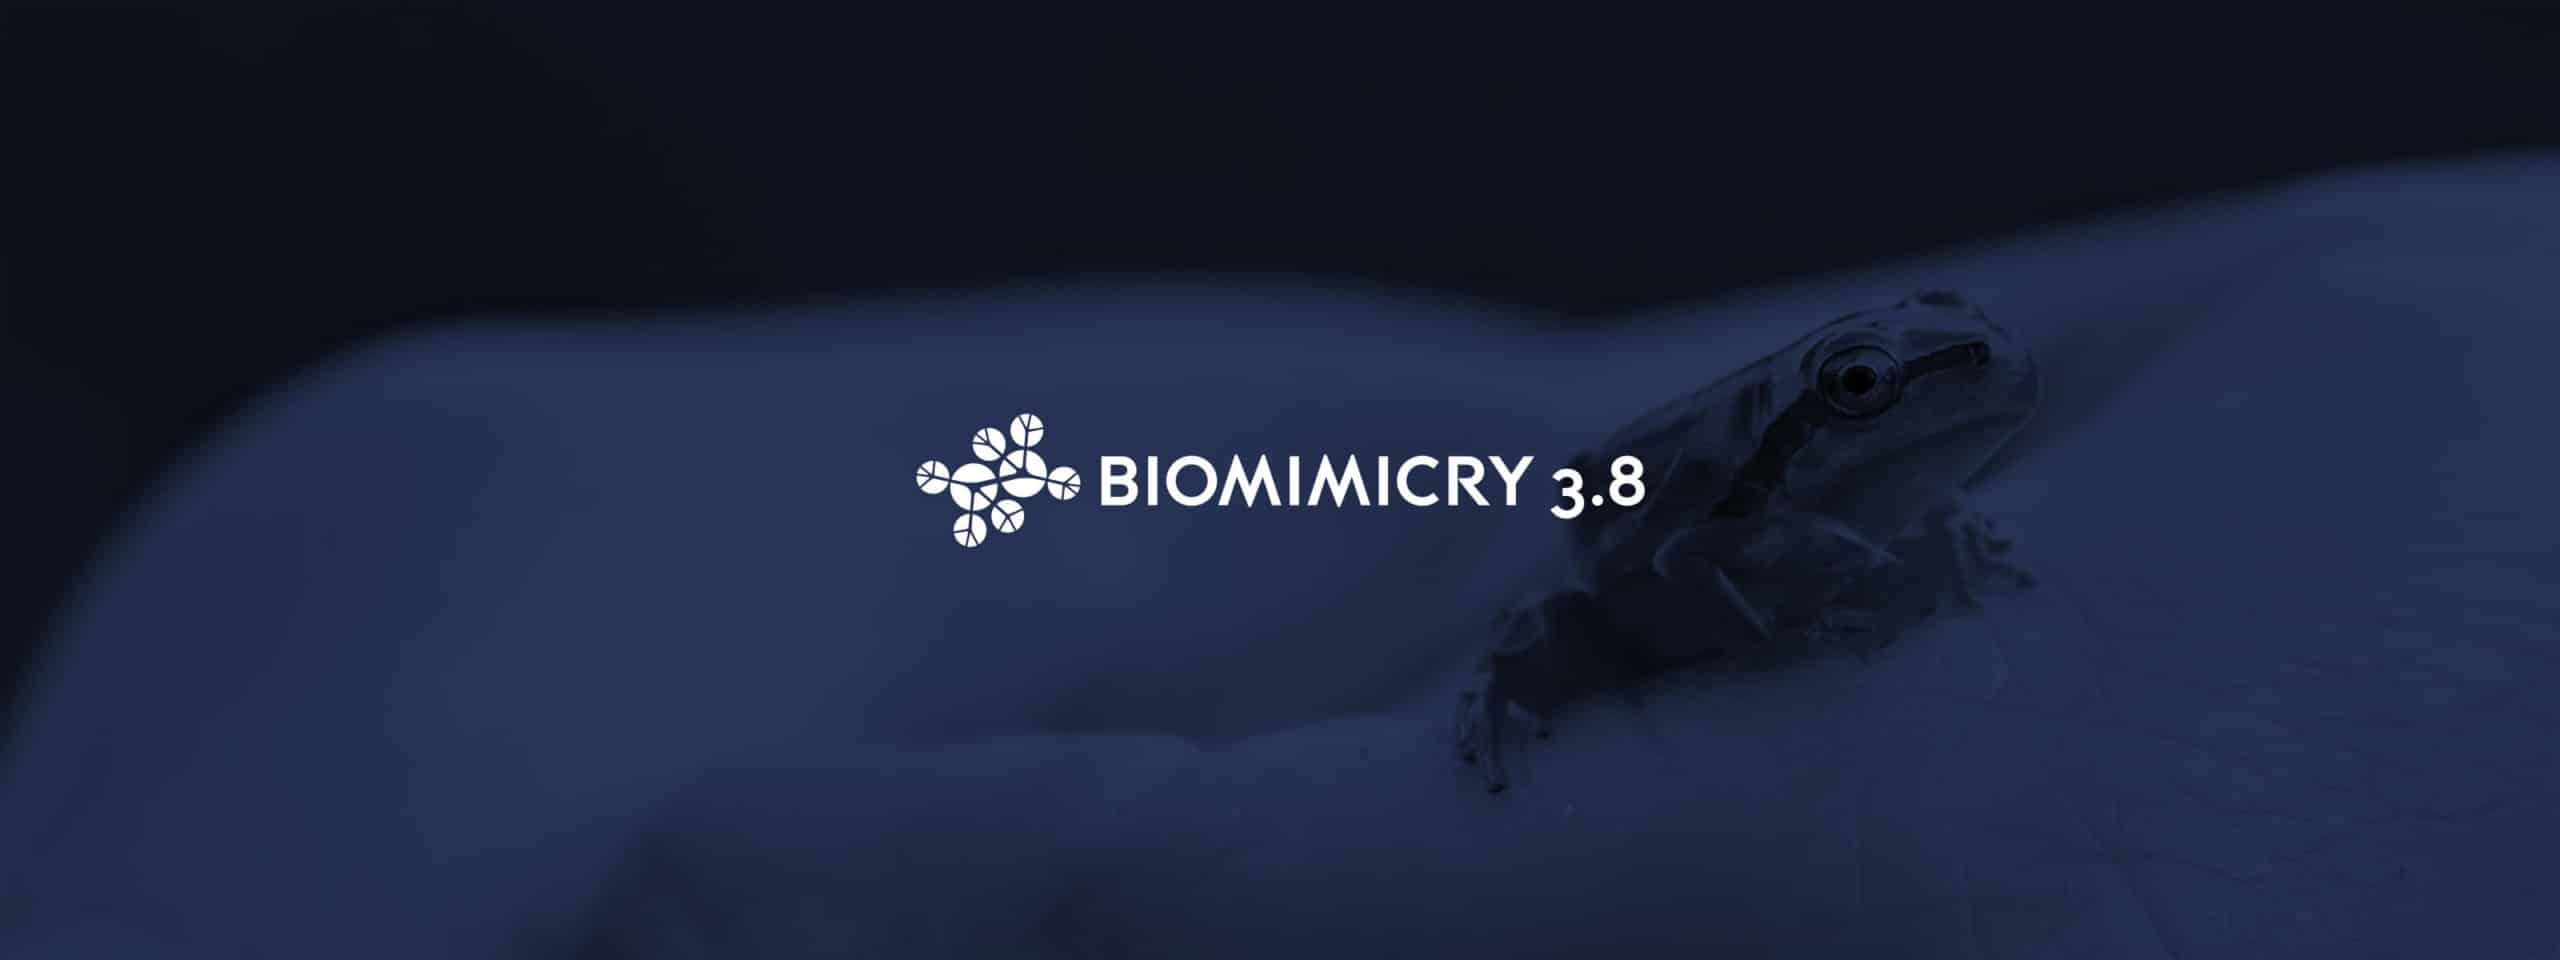 Biomimicry 3.8 logo and hero